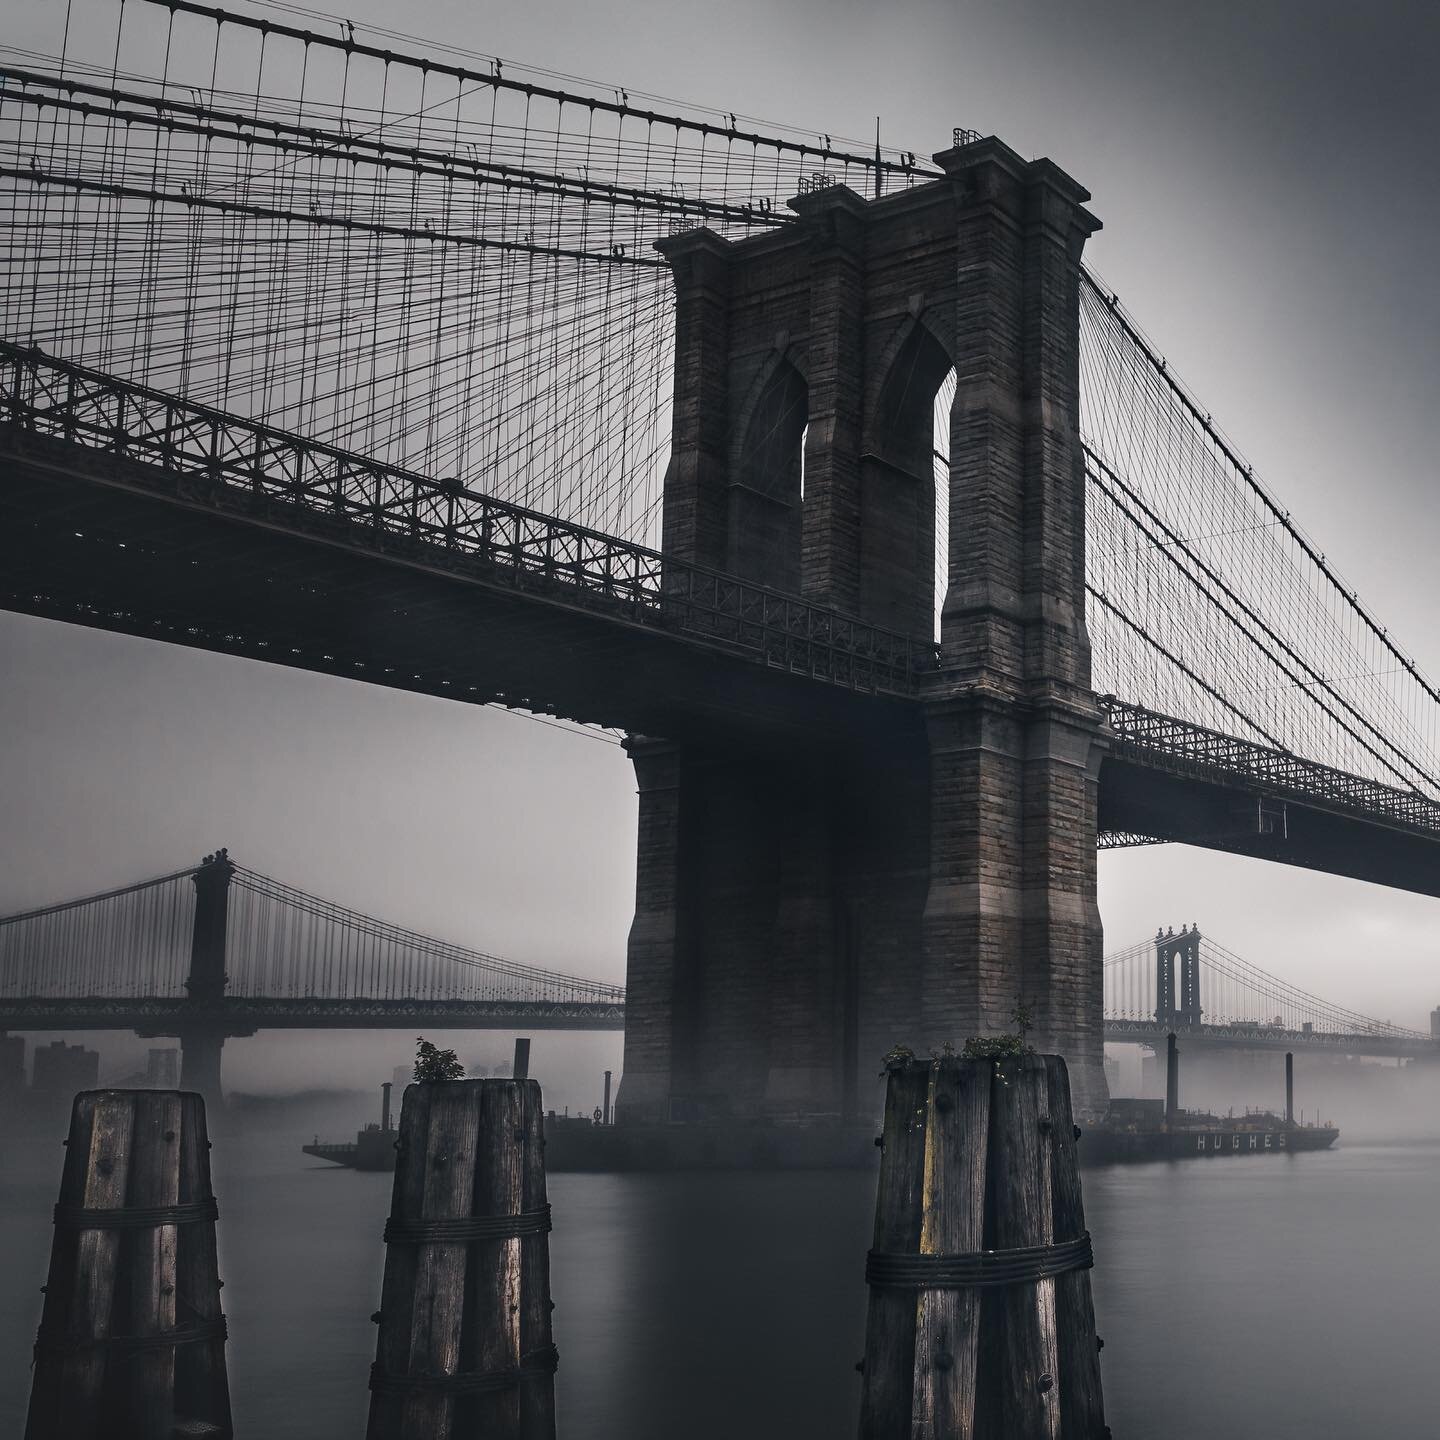 A foggy morning at the Brooklyn Bridge&hellip; #NYC #manhattan #newyorkcity #architecture #photography #city #nycphotographer #photo #beautiful #art #brooklynbridge #fog #leefilters